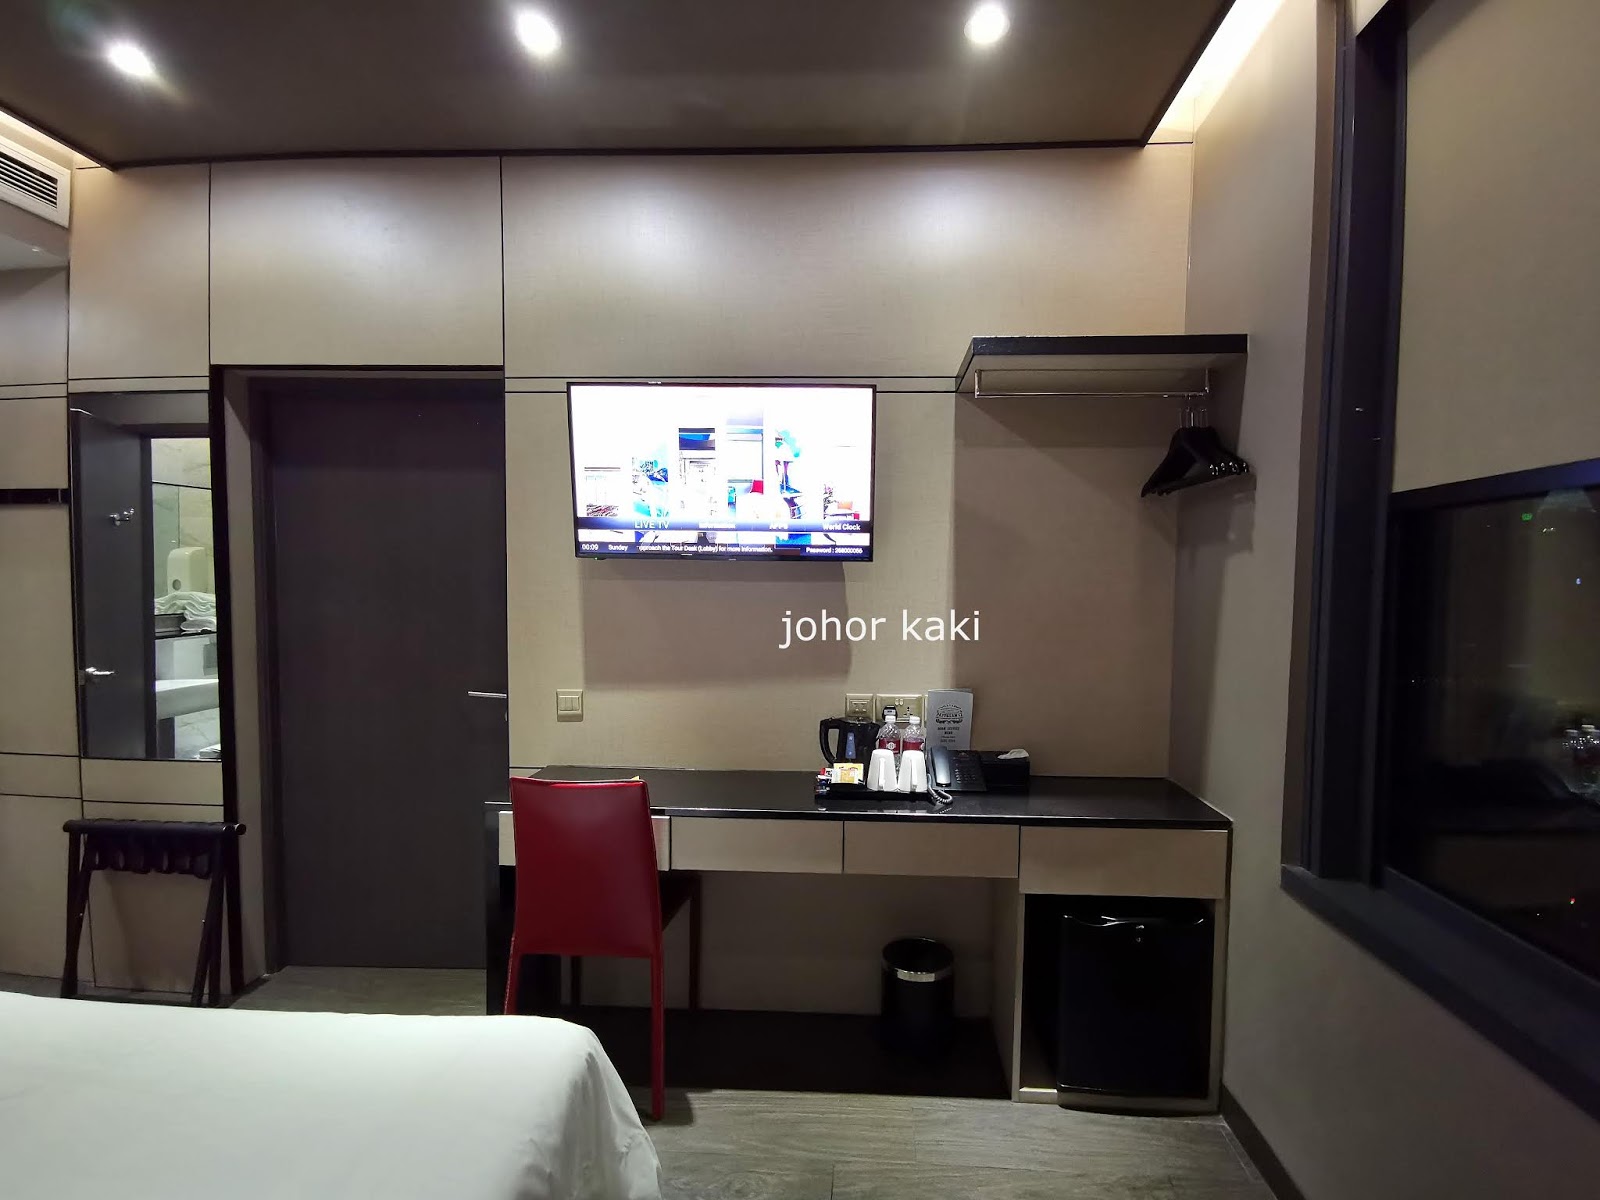 Hotel Boss Singapore Johor Kaki Travels For Food